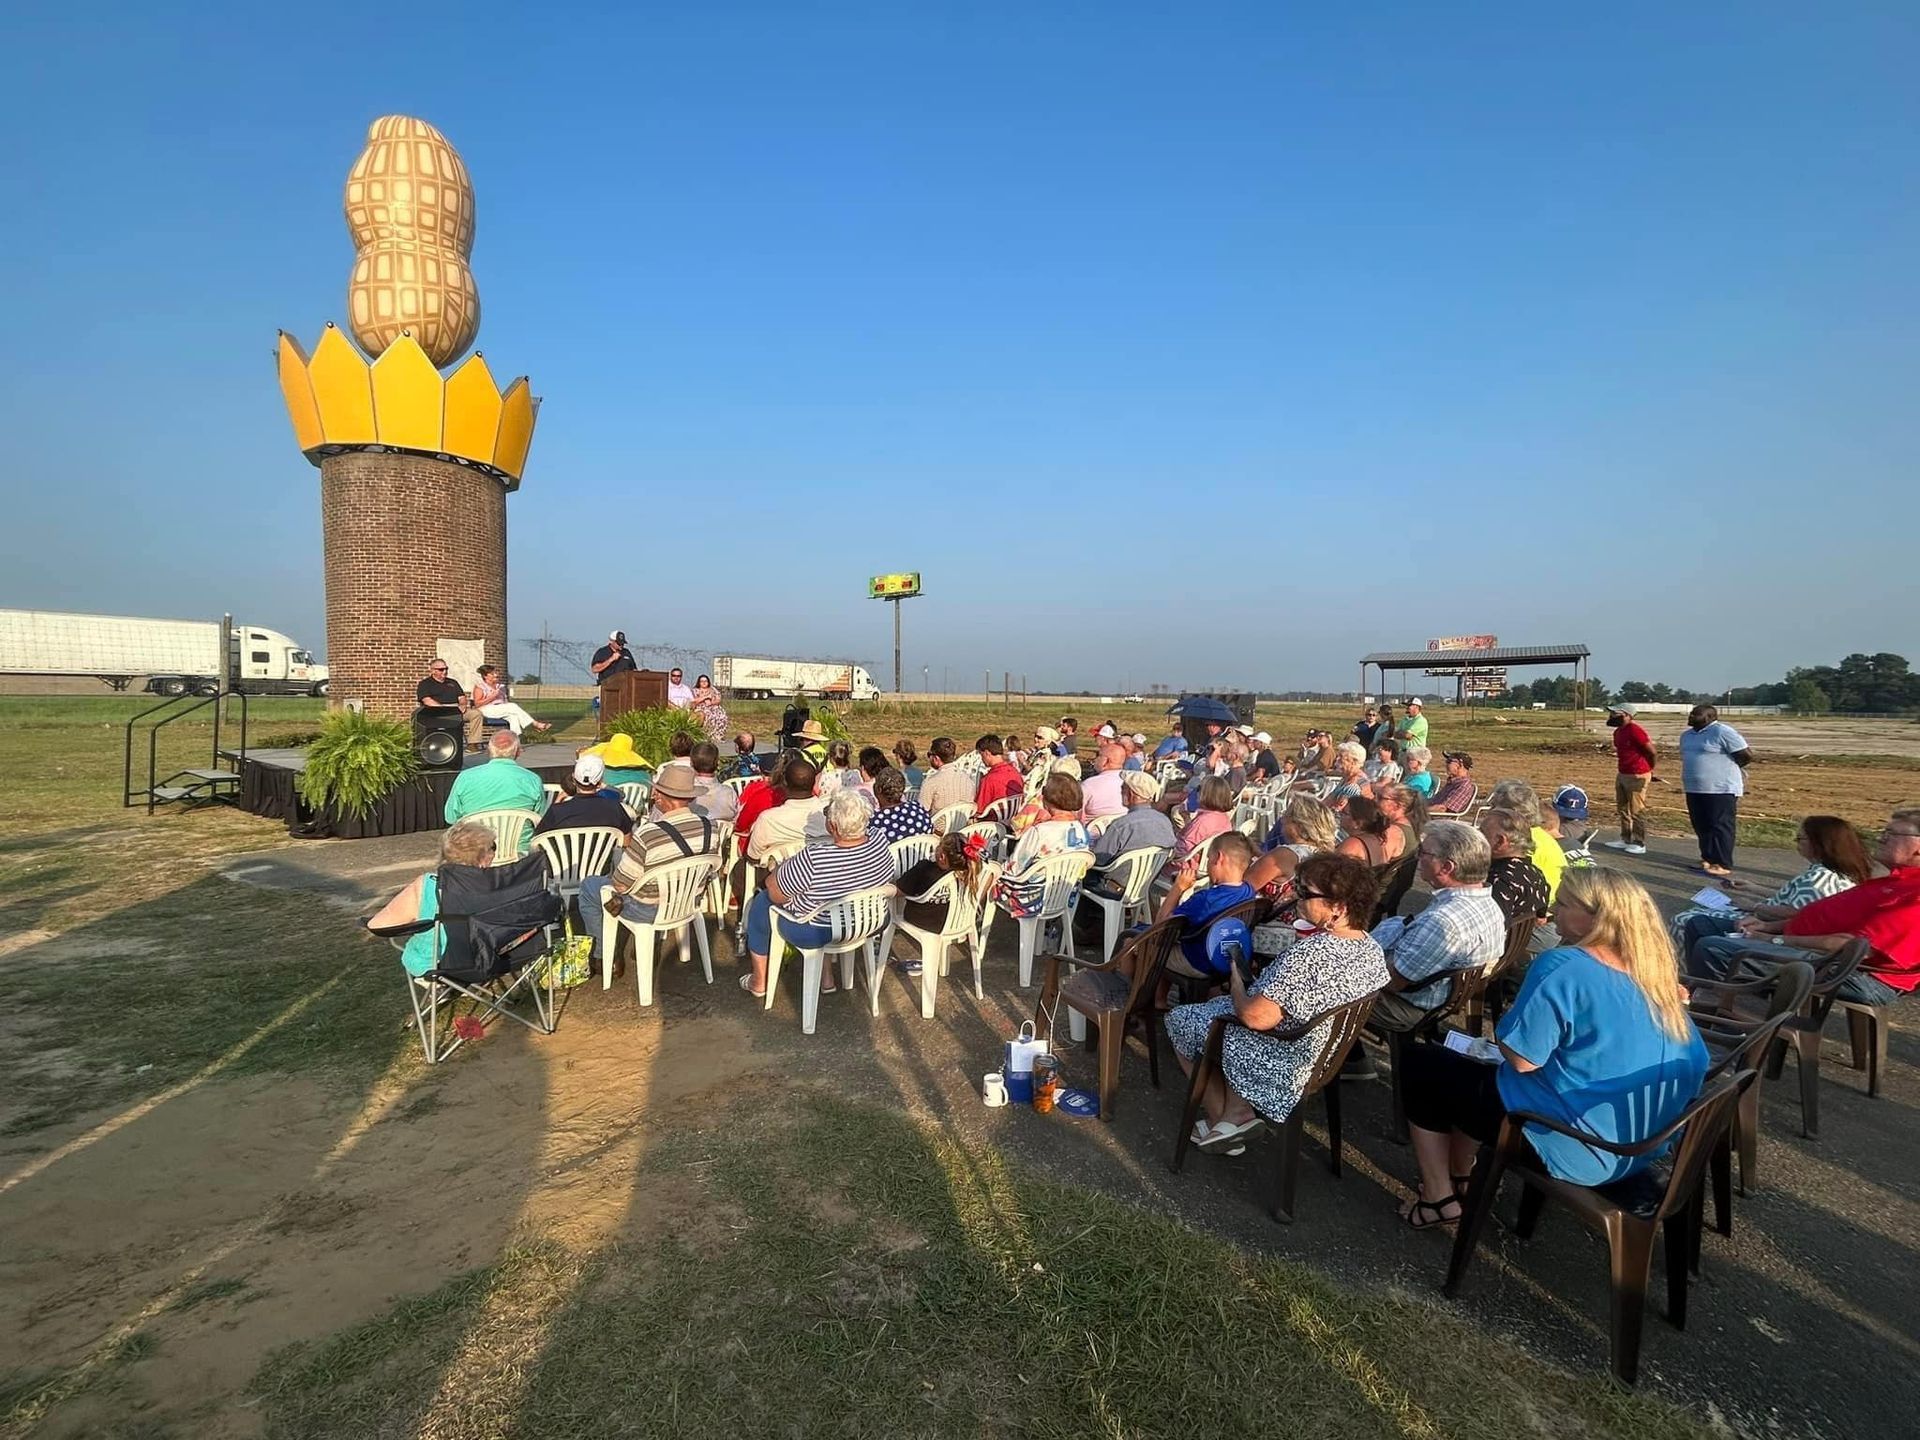 World's Largest Peanut Monument: world record in Ashburn, Georgia